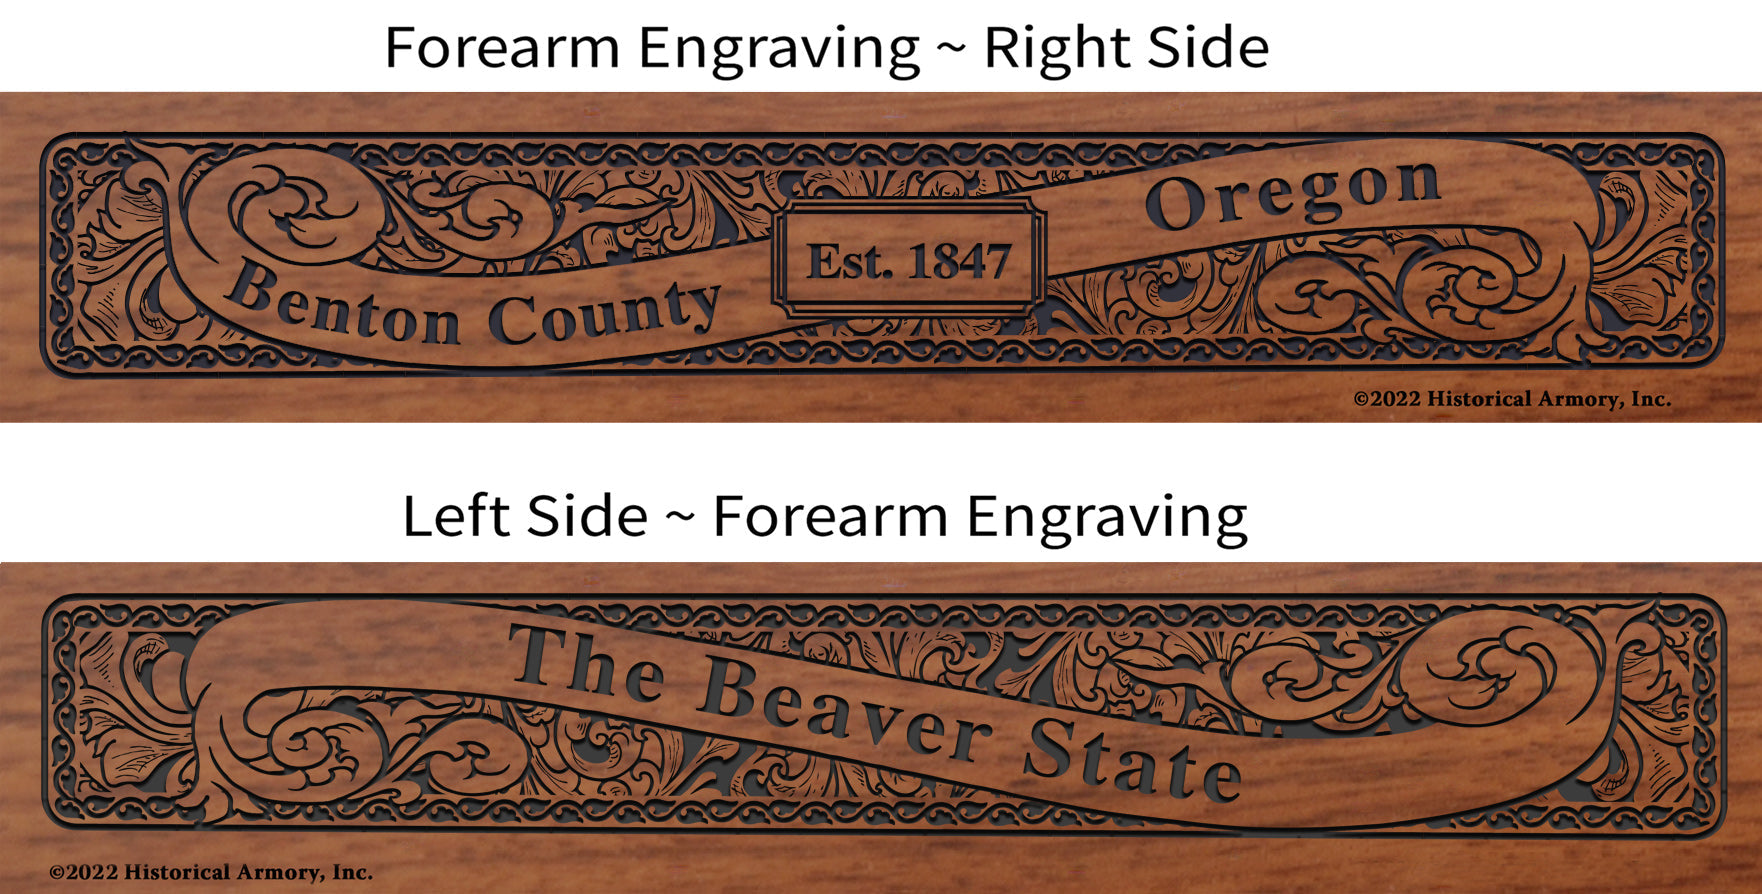 Benton County Oregon Engraved Rifle Forearm